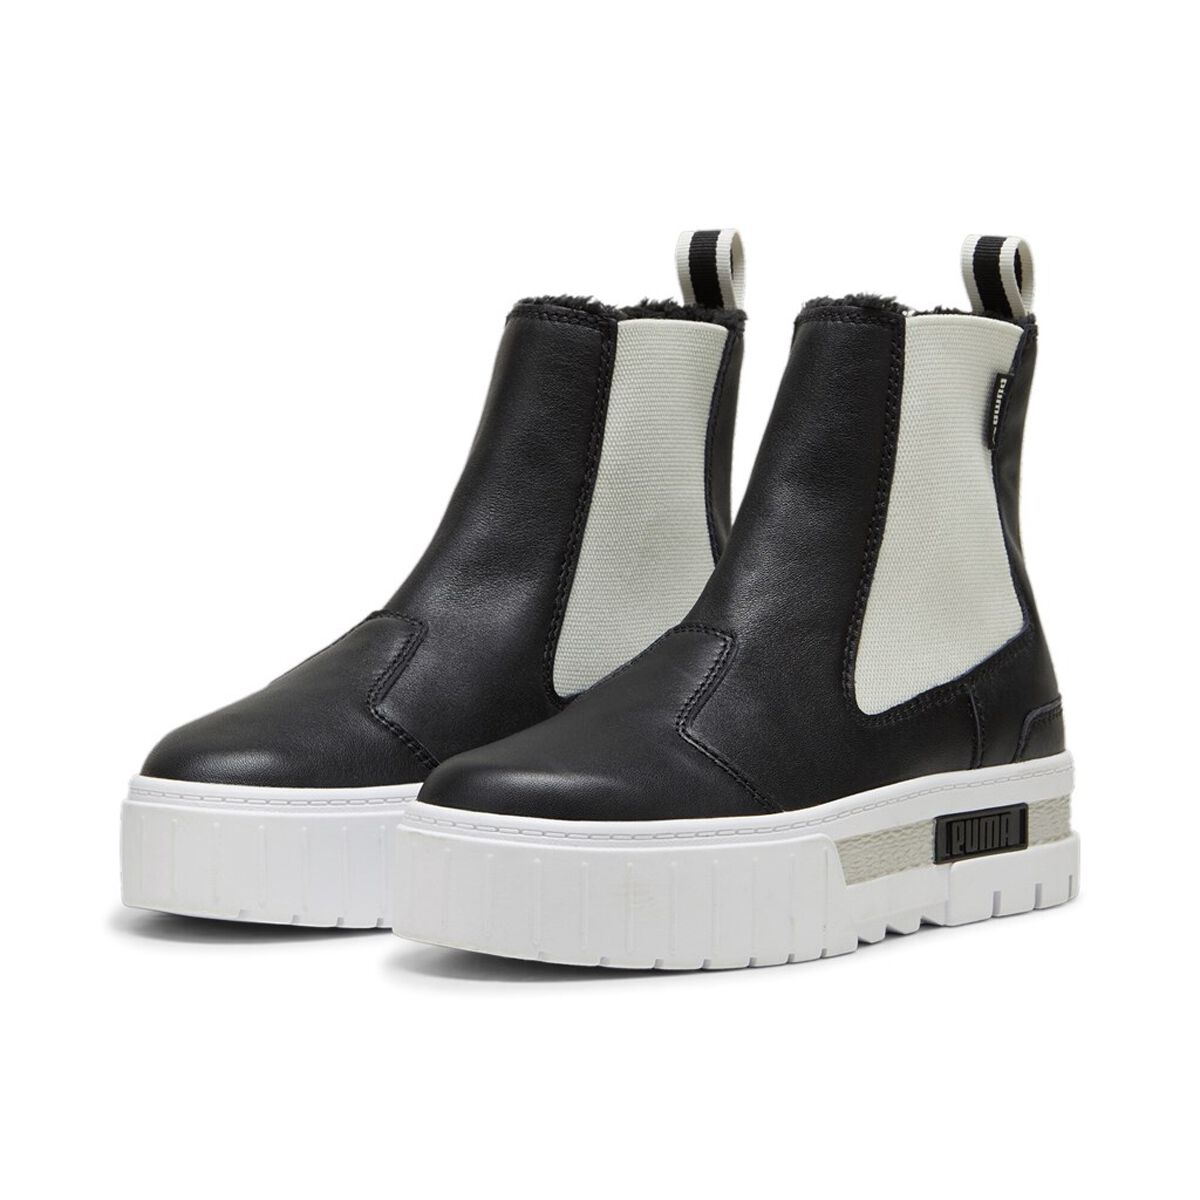 Puma Sneaker high - Mayze Chelsea Winter Wns - EU36 bis EU41 - für Damen - Größe EU41 - schwarz